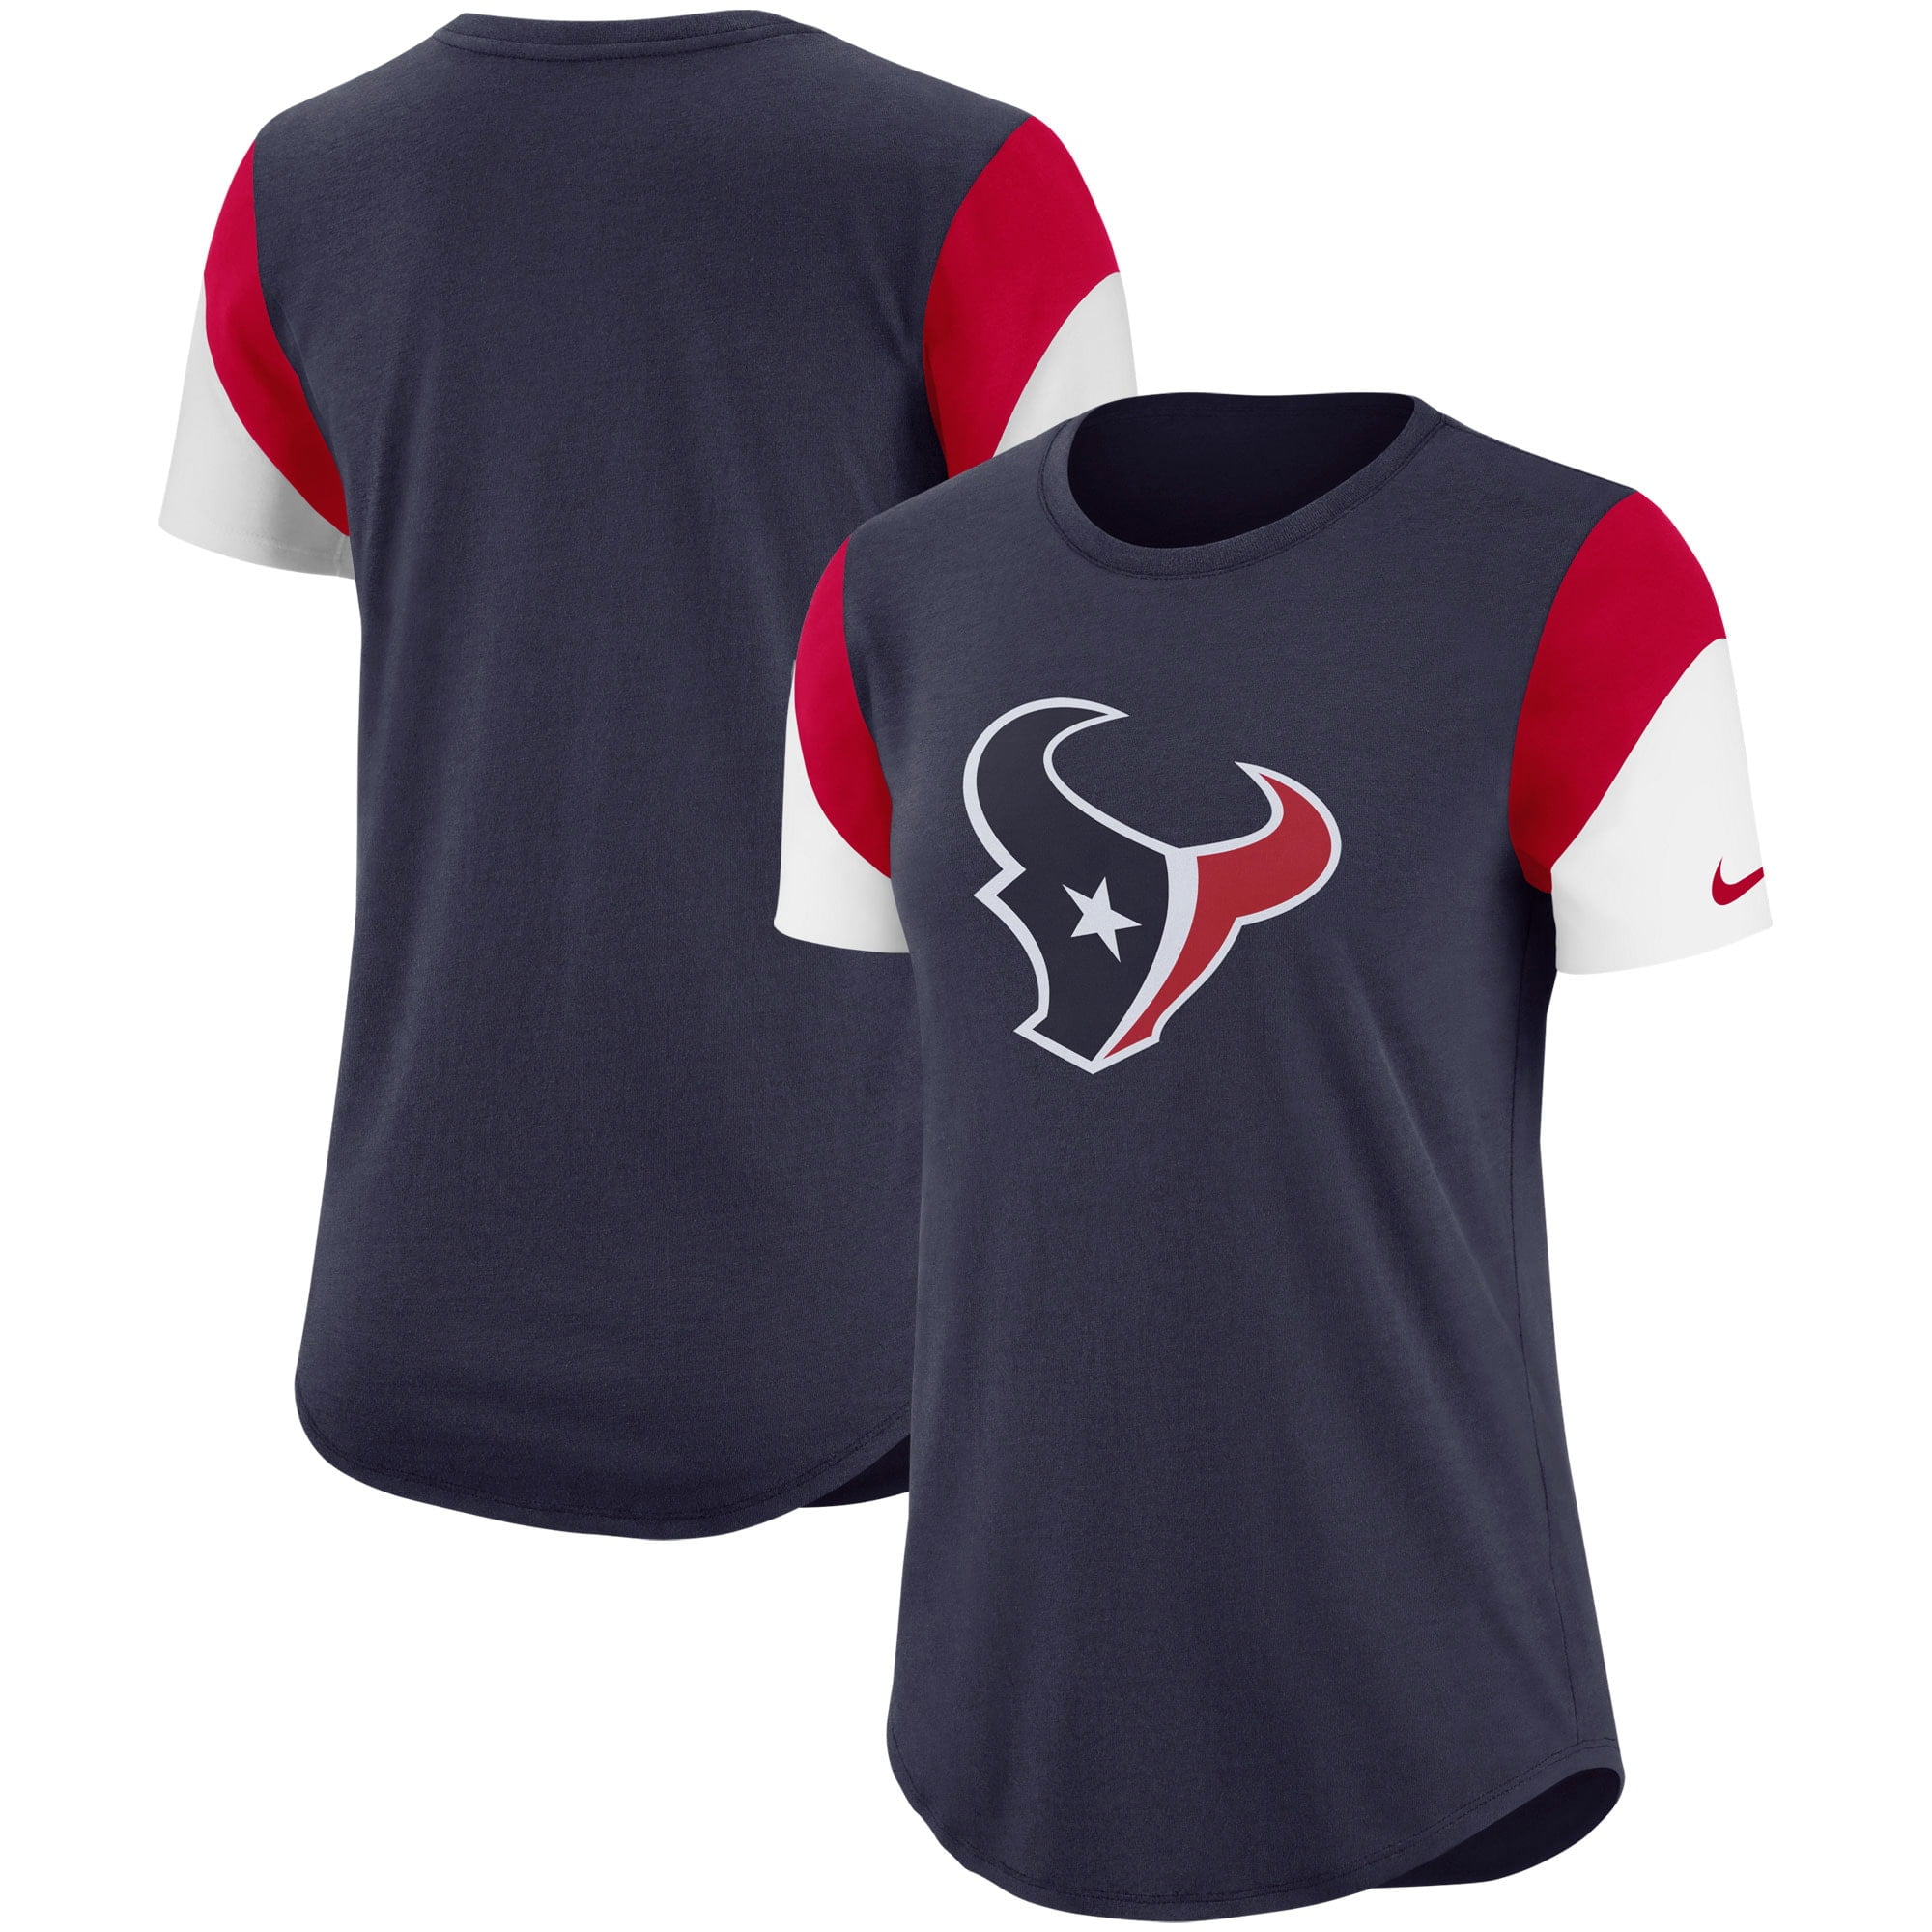 Women's Nike Navy/Red Houston Texans 